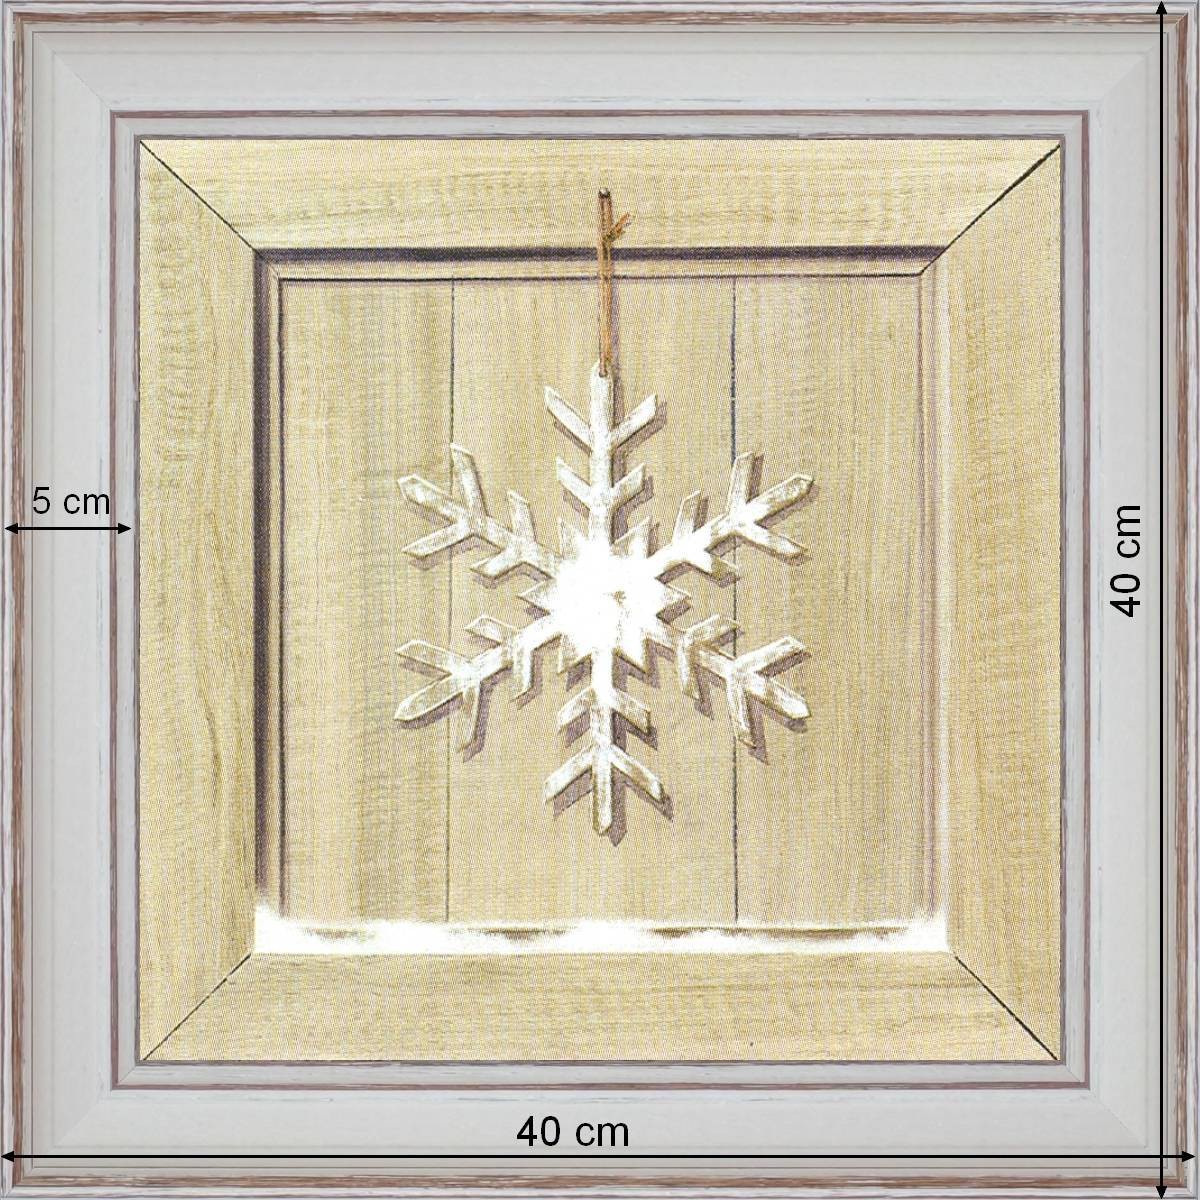 Flake - dimensions 40 x 40 cm - White